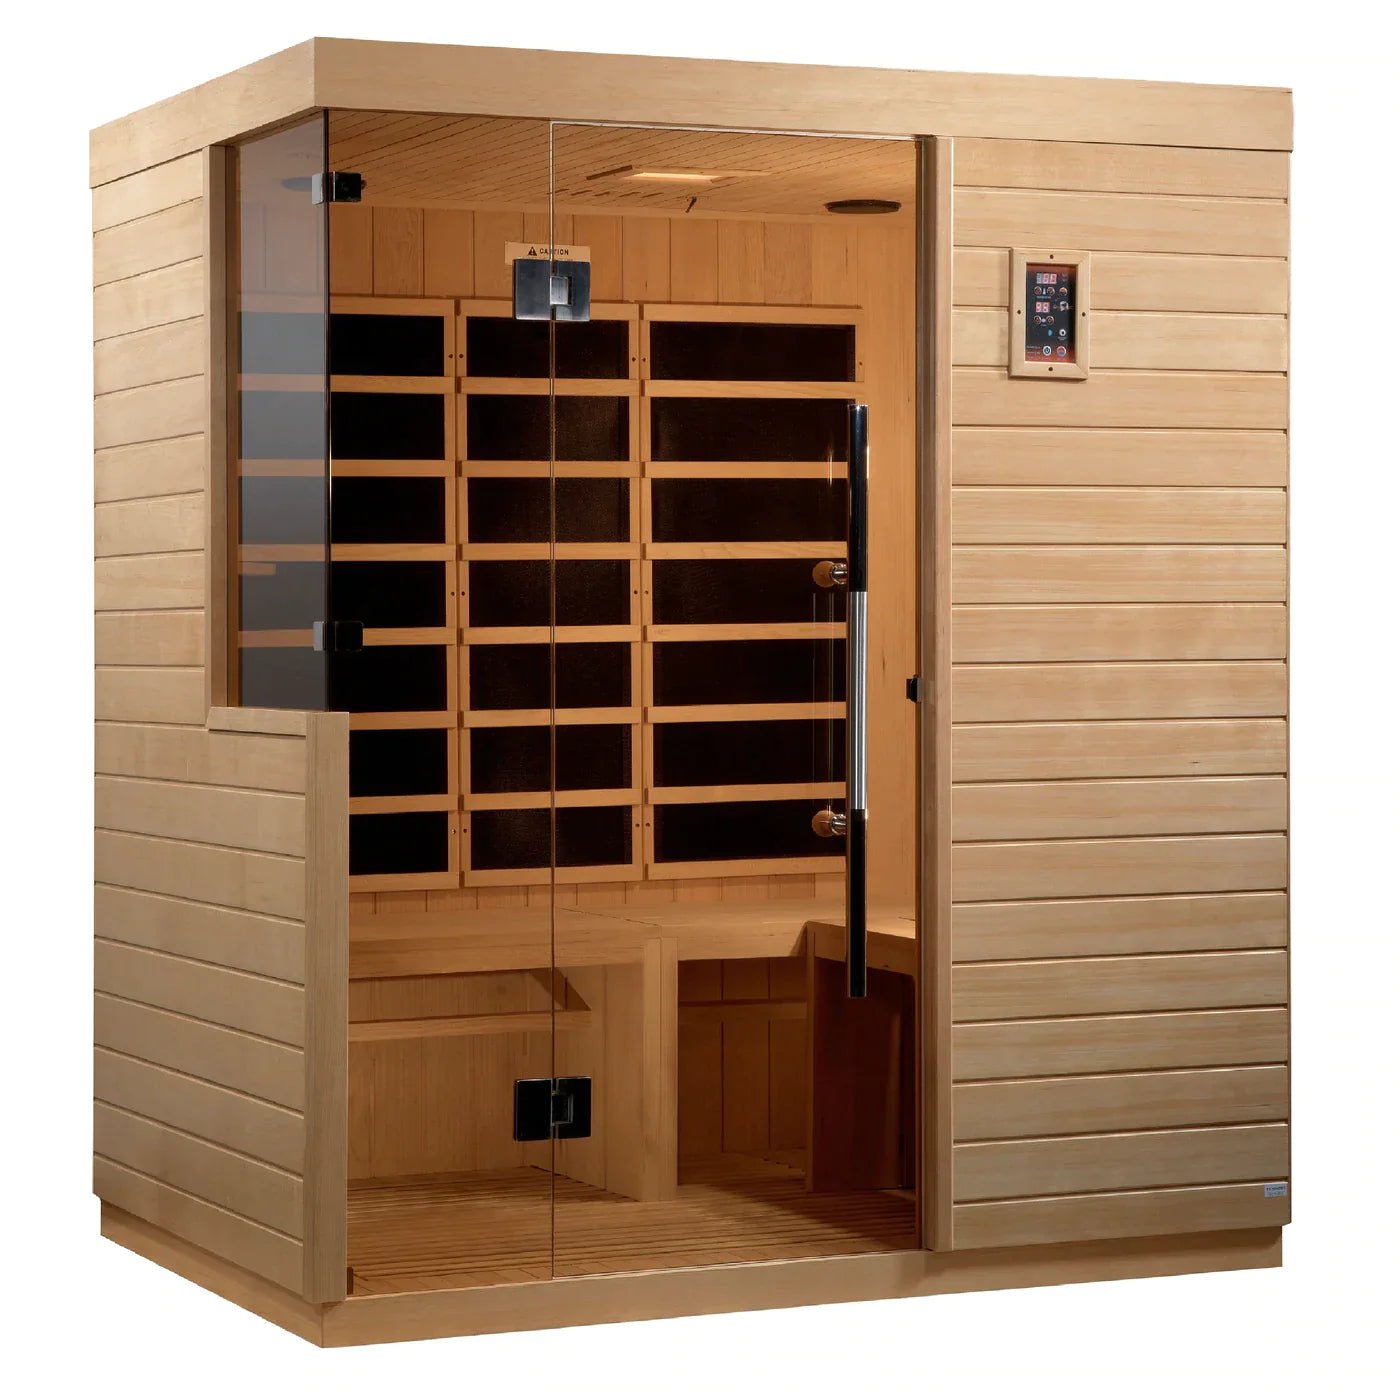 Golden Designs Bilbao 3 Person Ultra Low EMF FAR Infrared Sauna - The Sauna World